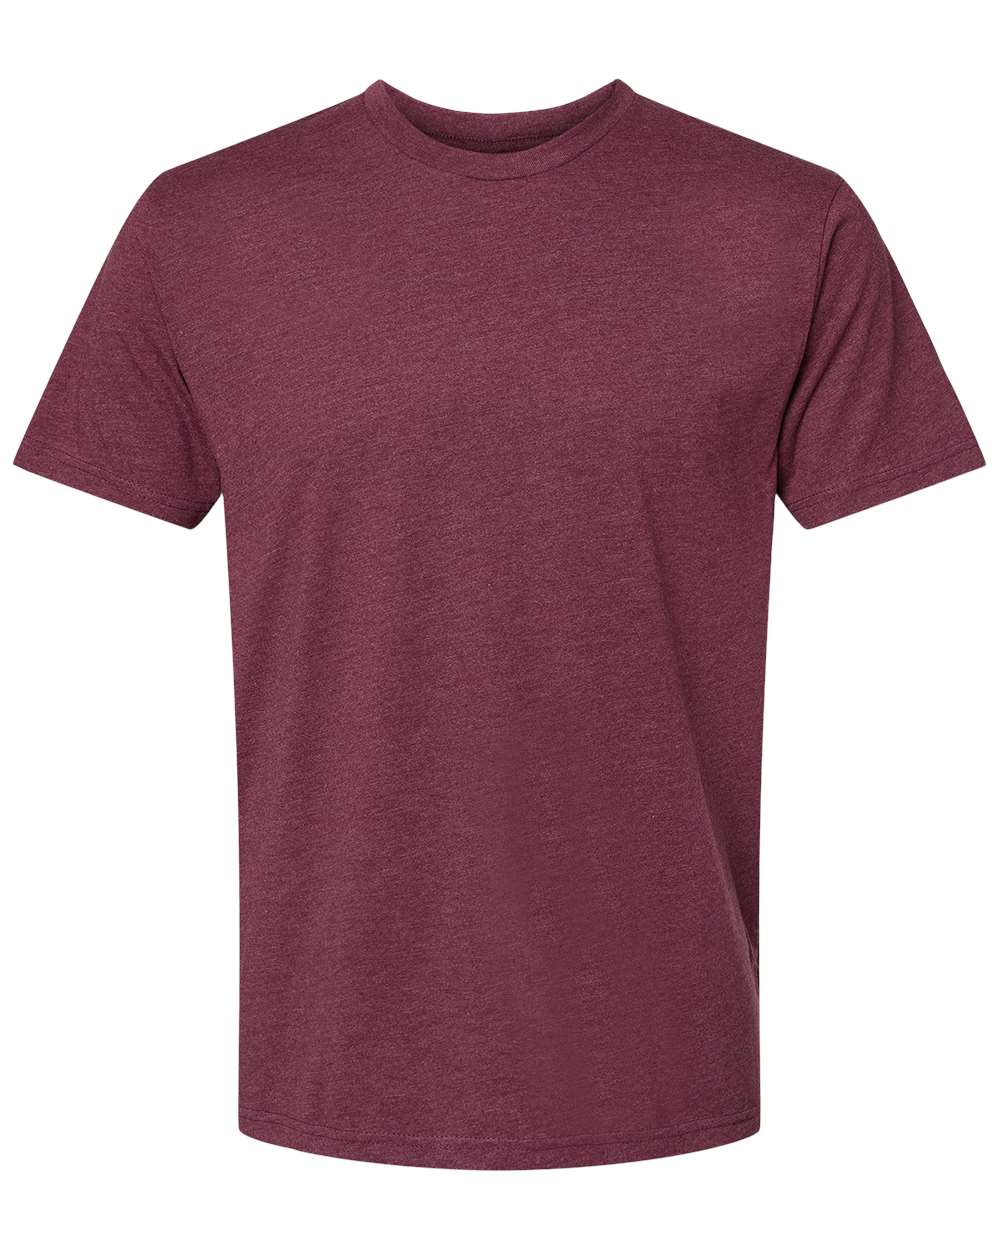 Unisex CVC T-Shirt - DSP On Demand